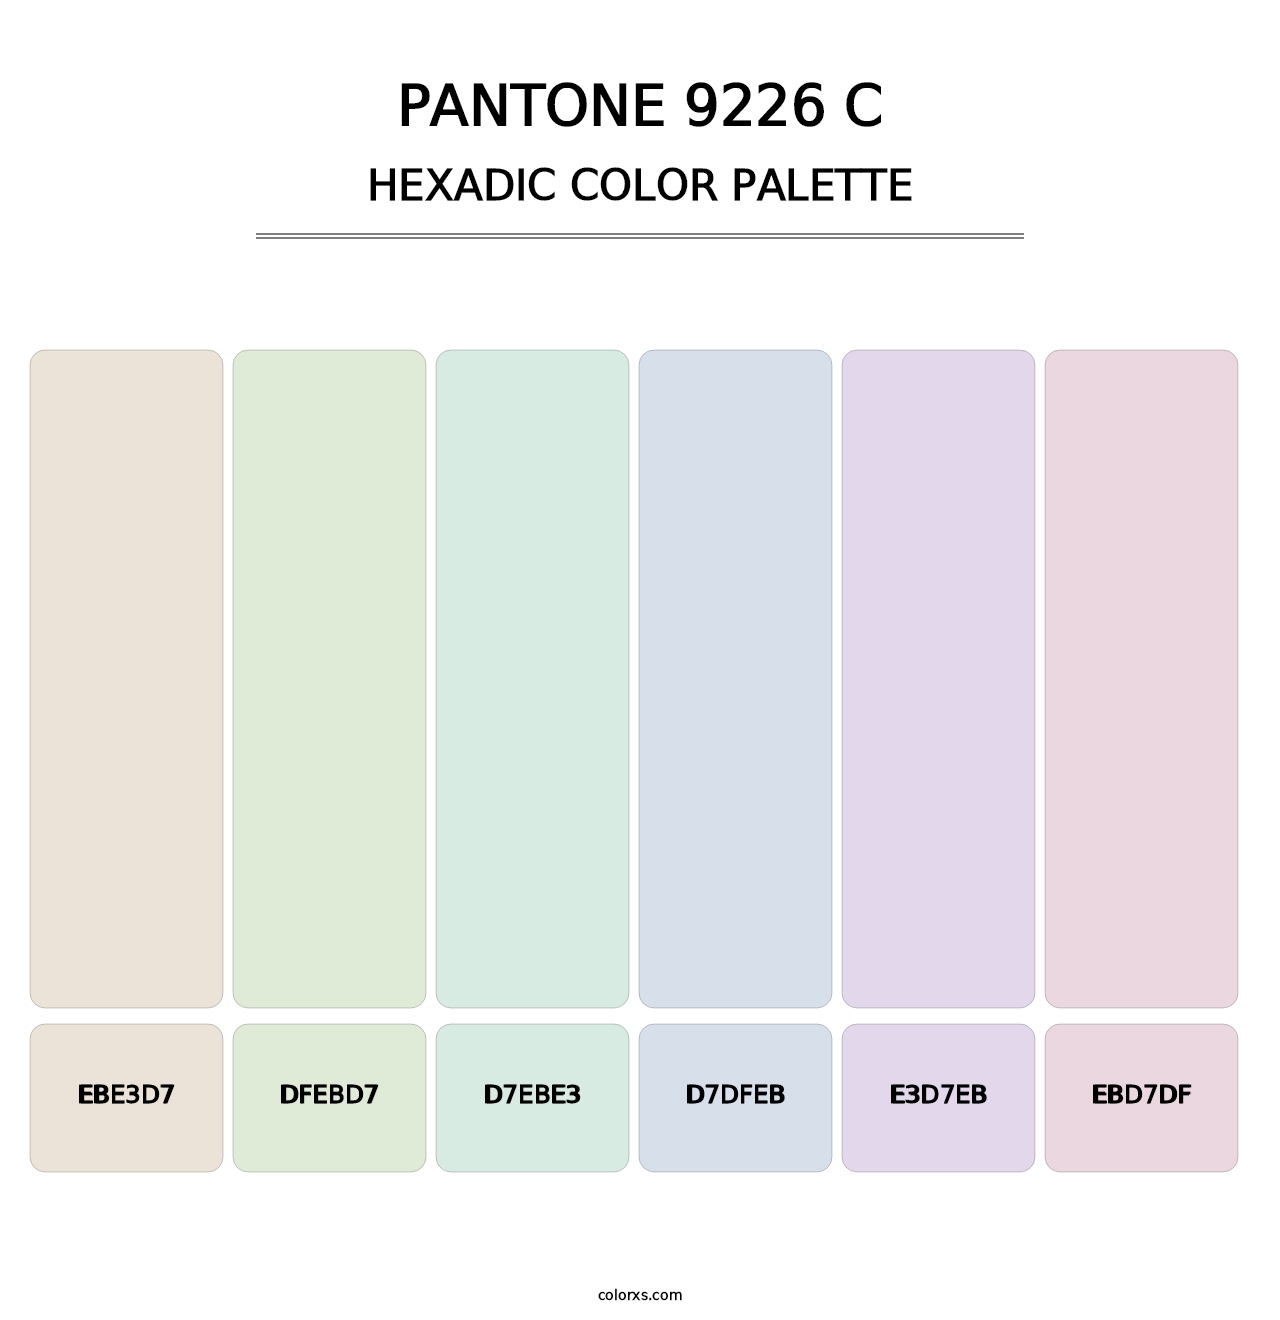 PANTONE 9226 C - Hexadic Color Palette